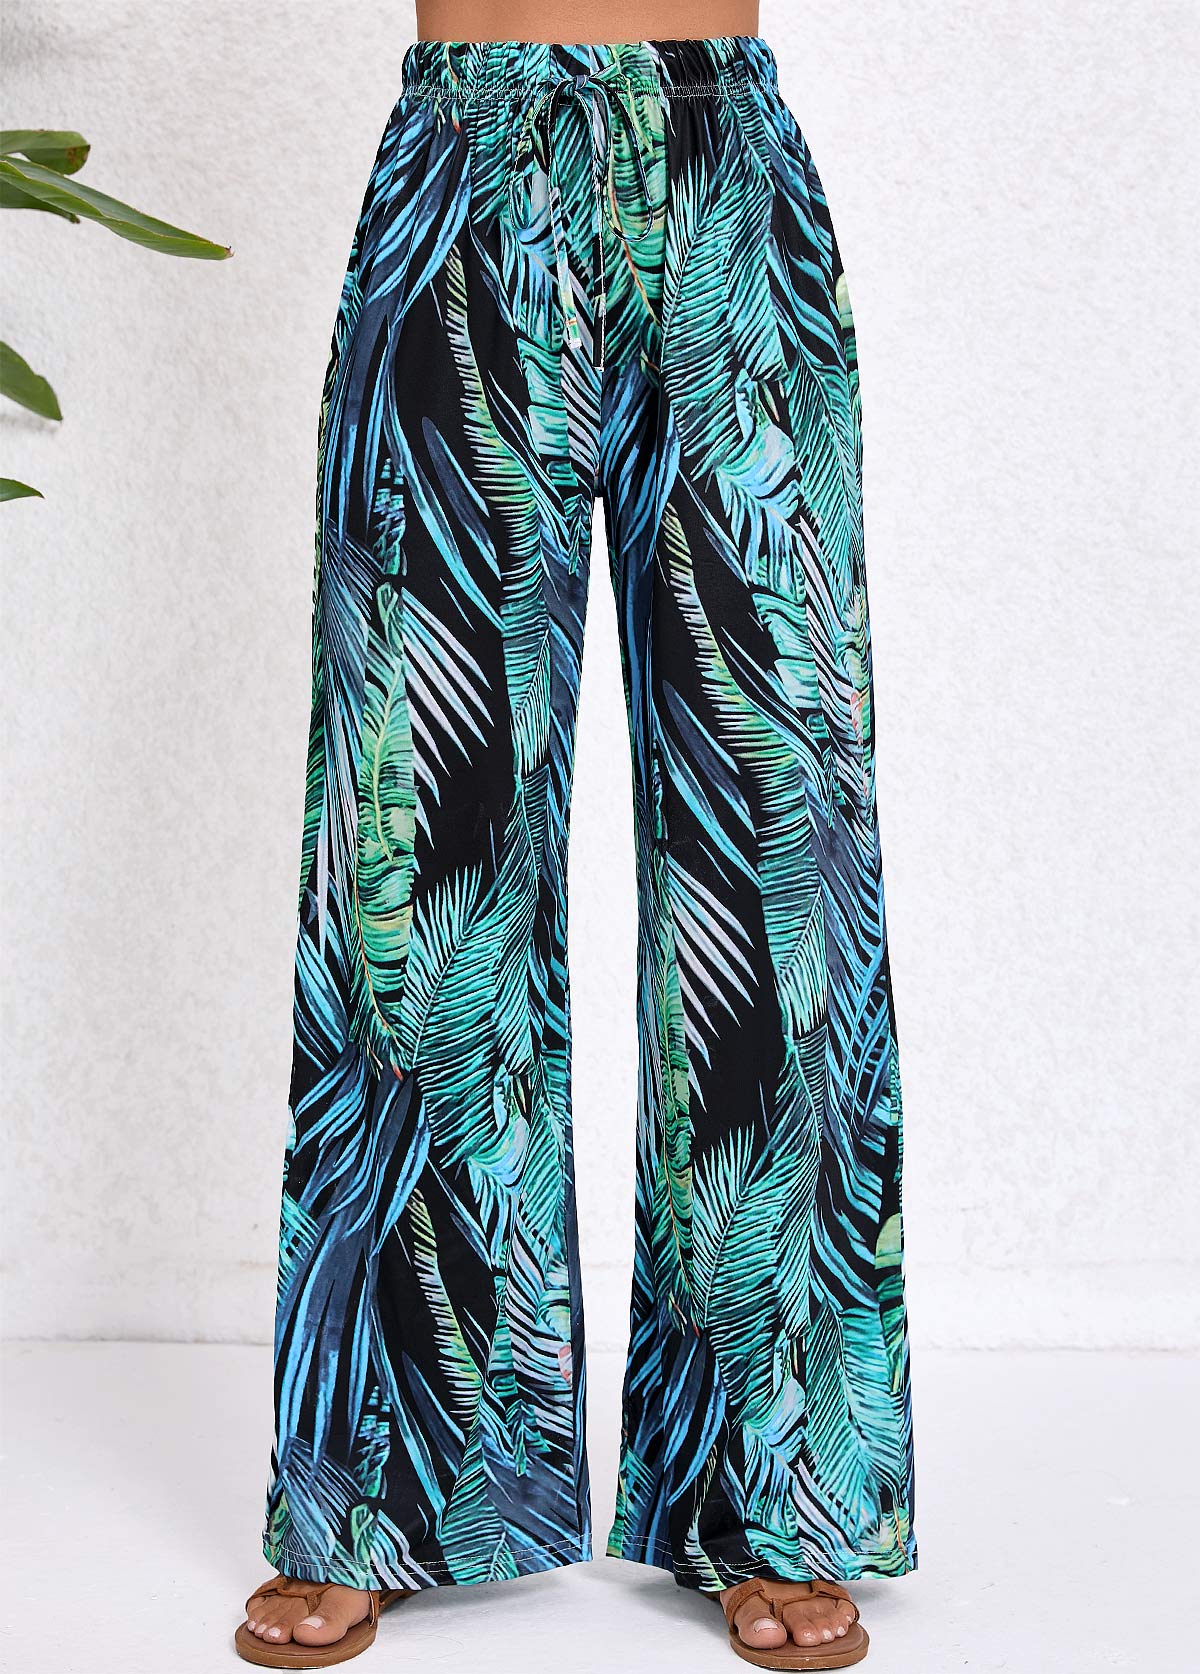 Pocket Tropical Plants Print Turquoise Elastic Waist Pants